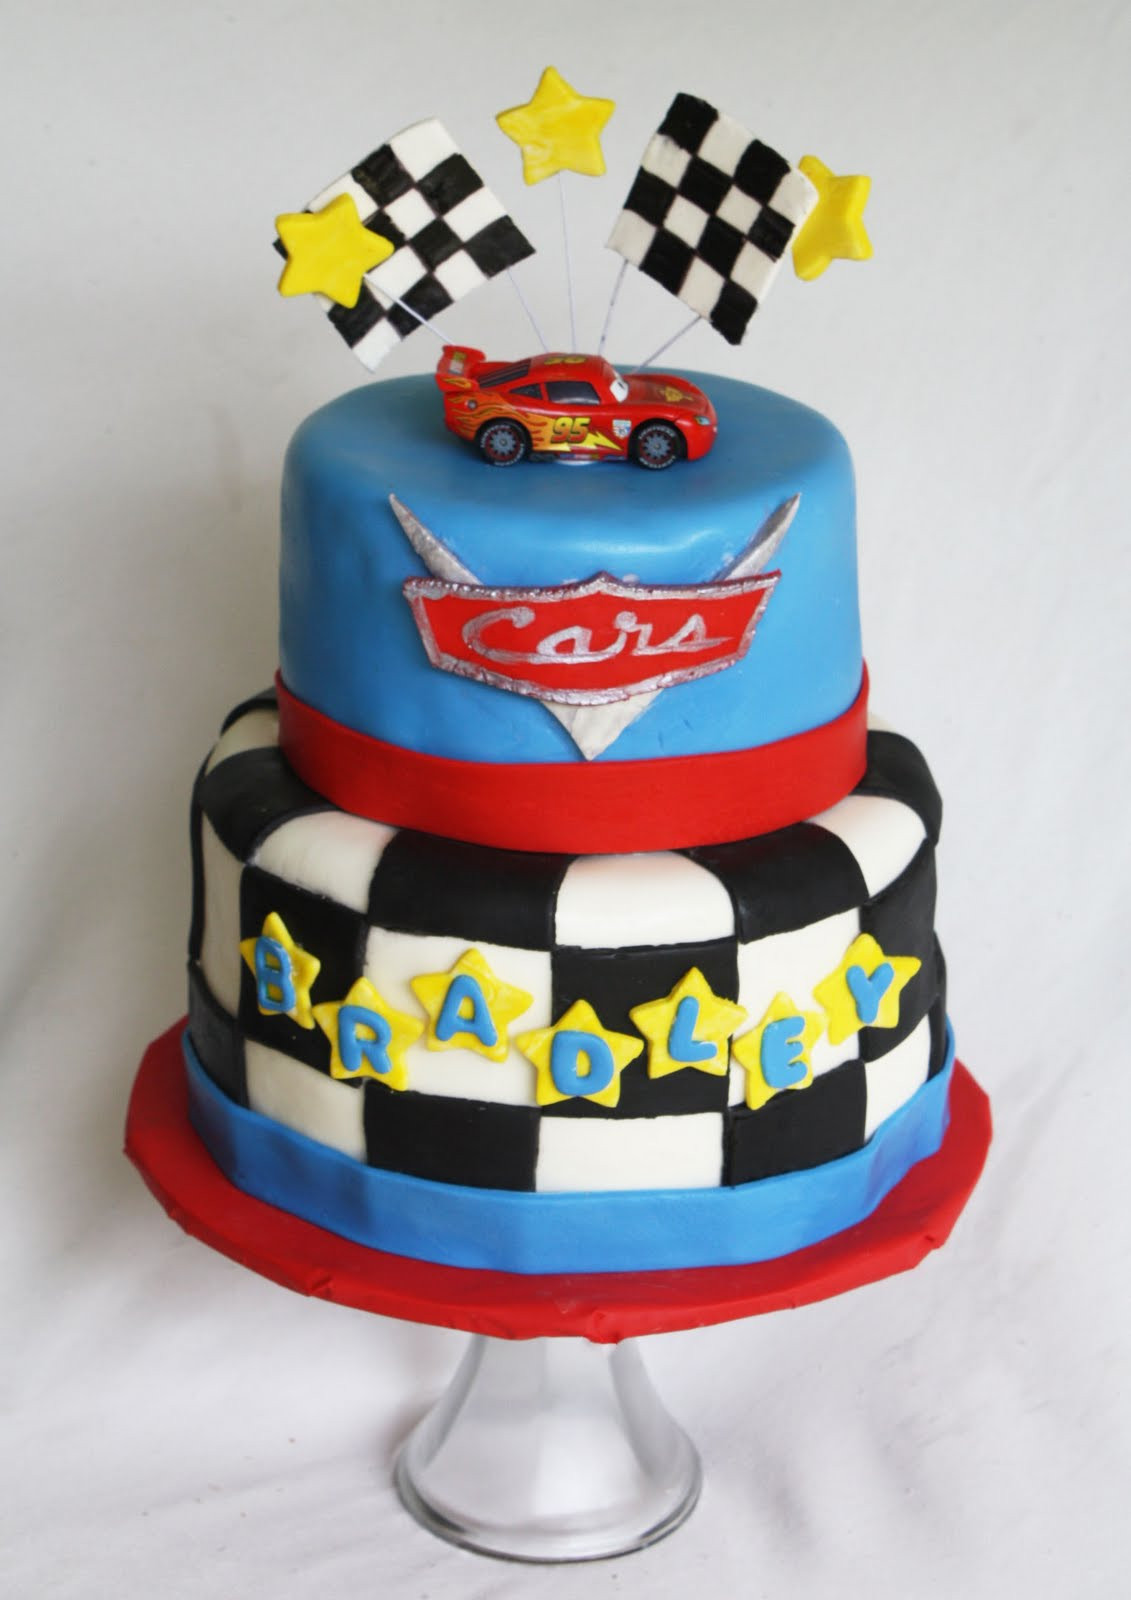 Cars Birthday Cakes
 A Disney Cars Cake